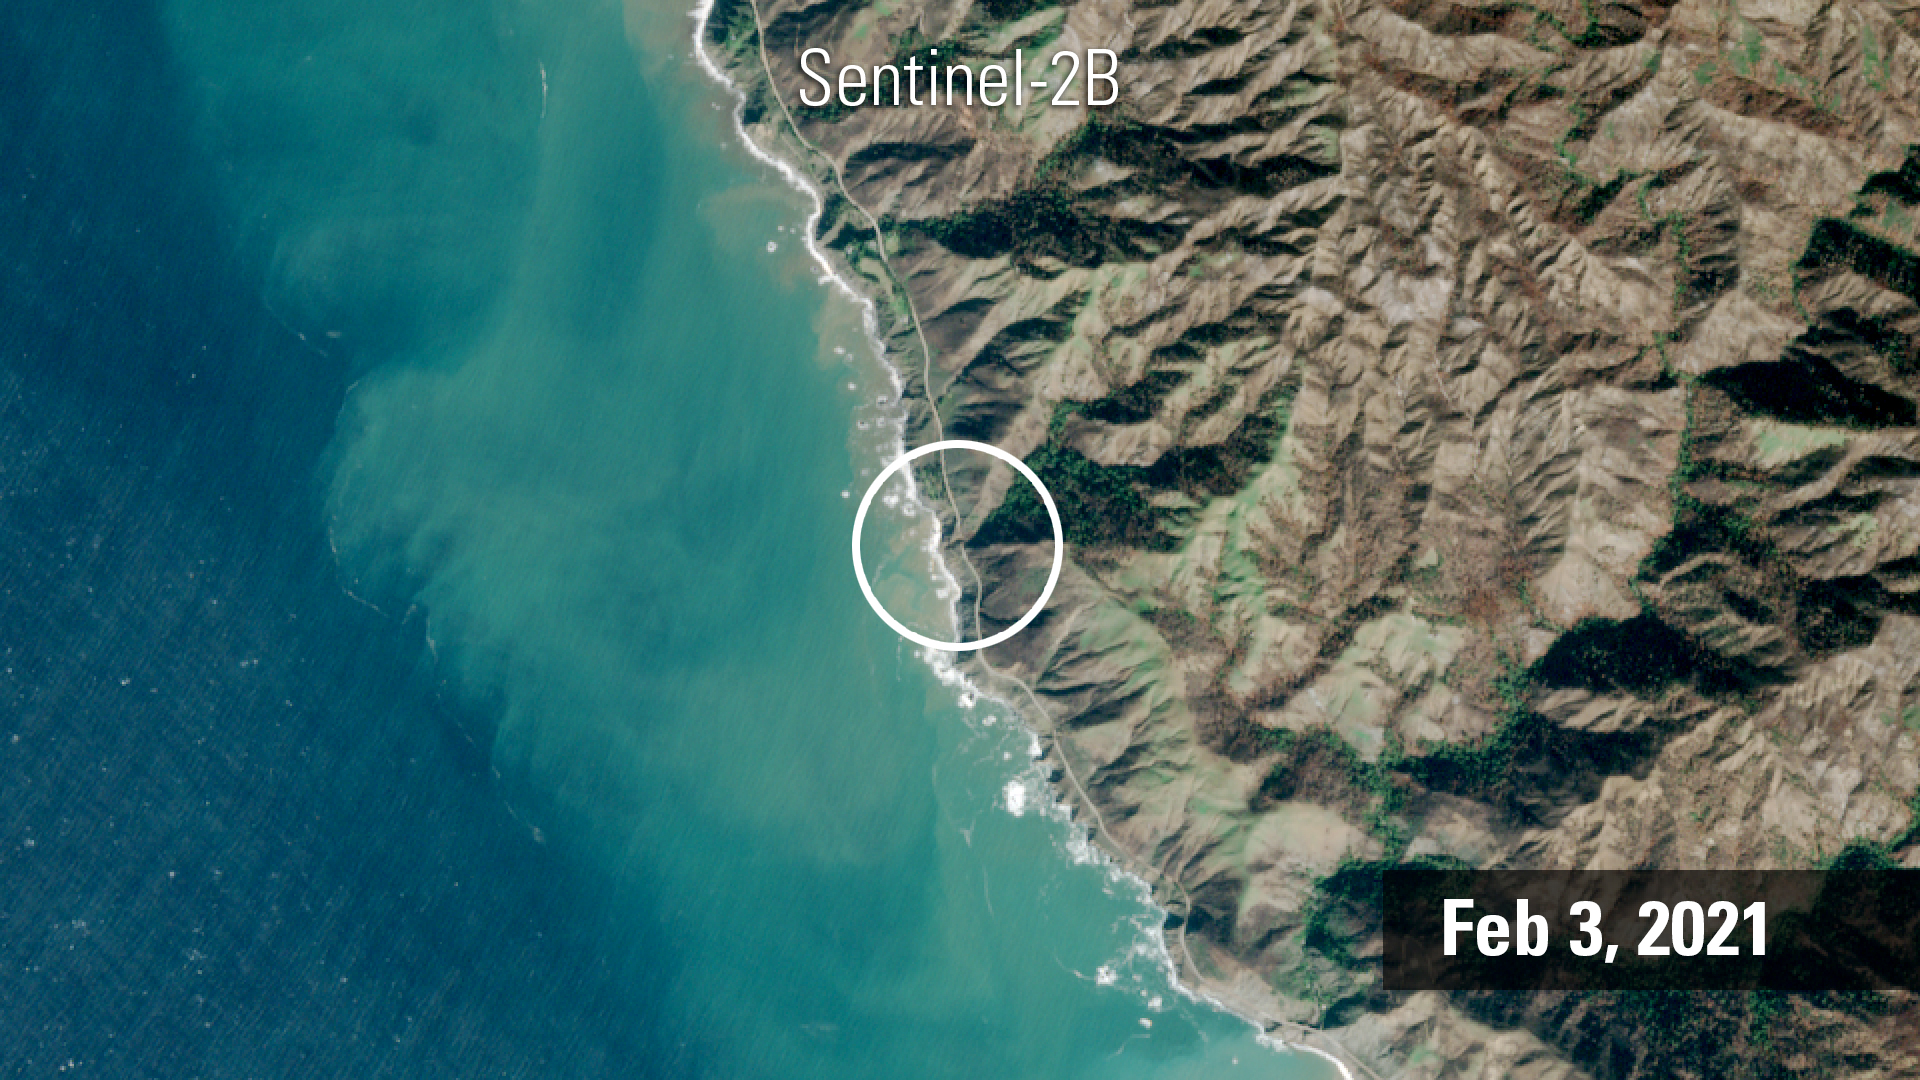 Color satellite image of Big Sur, CA in February 2020